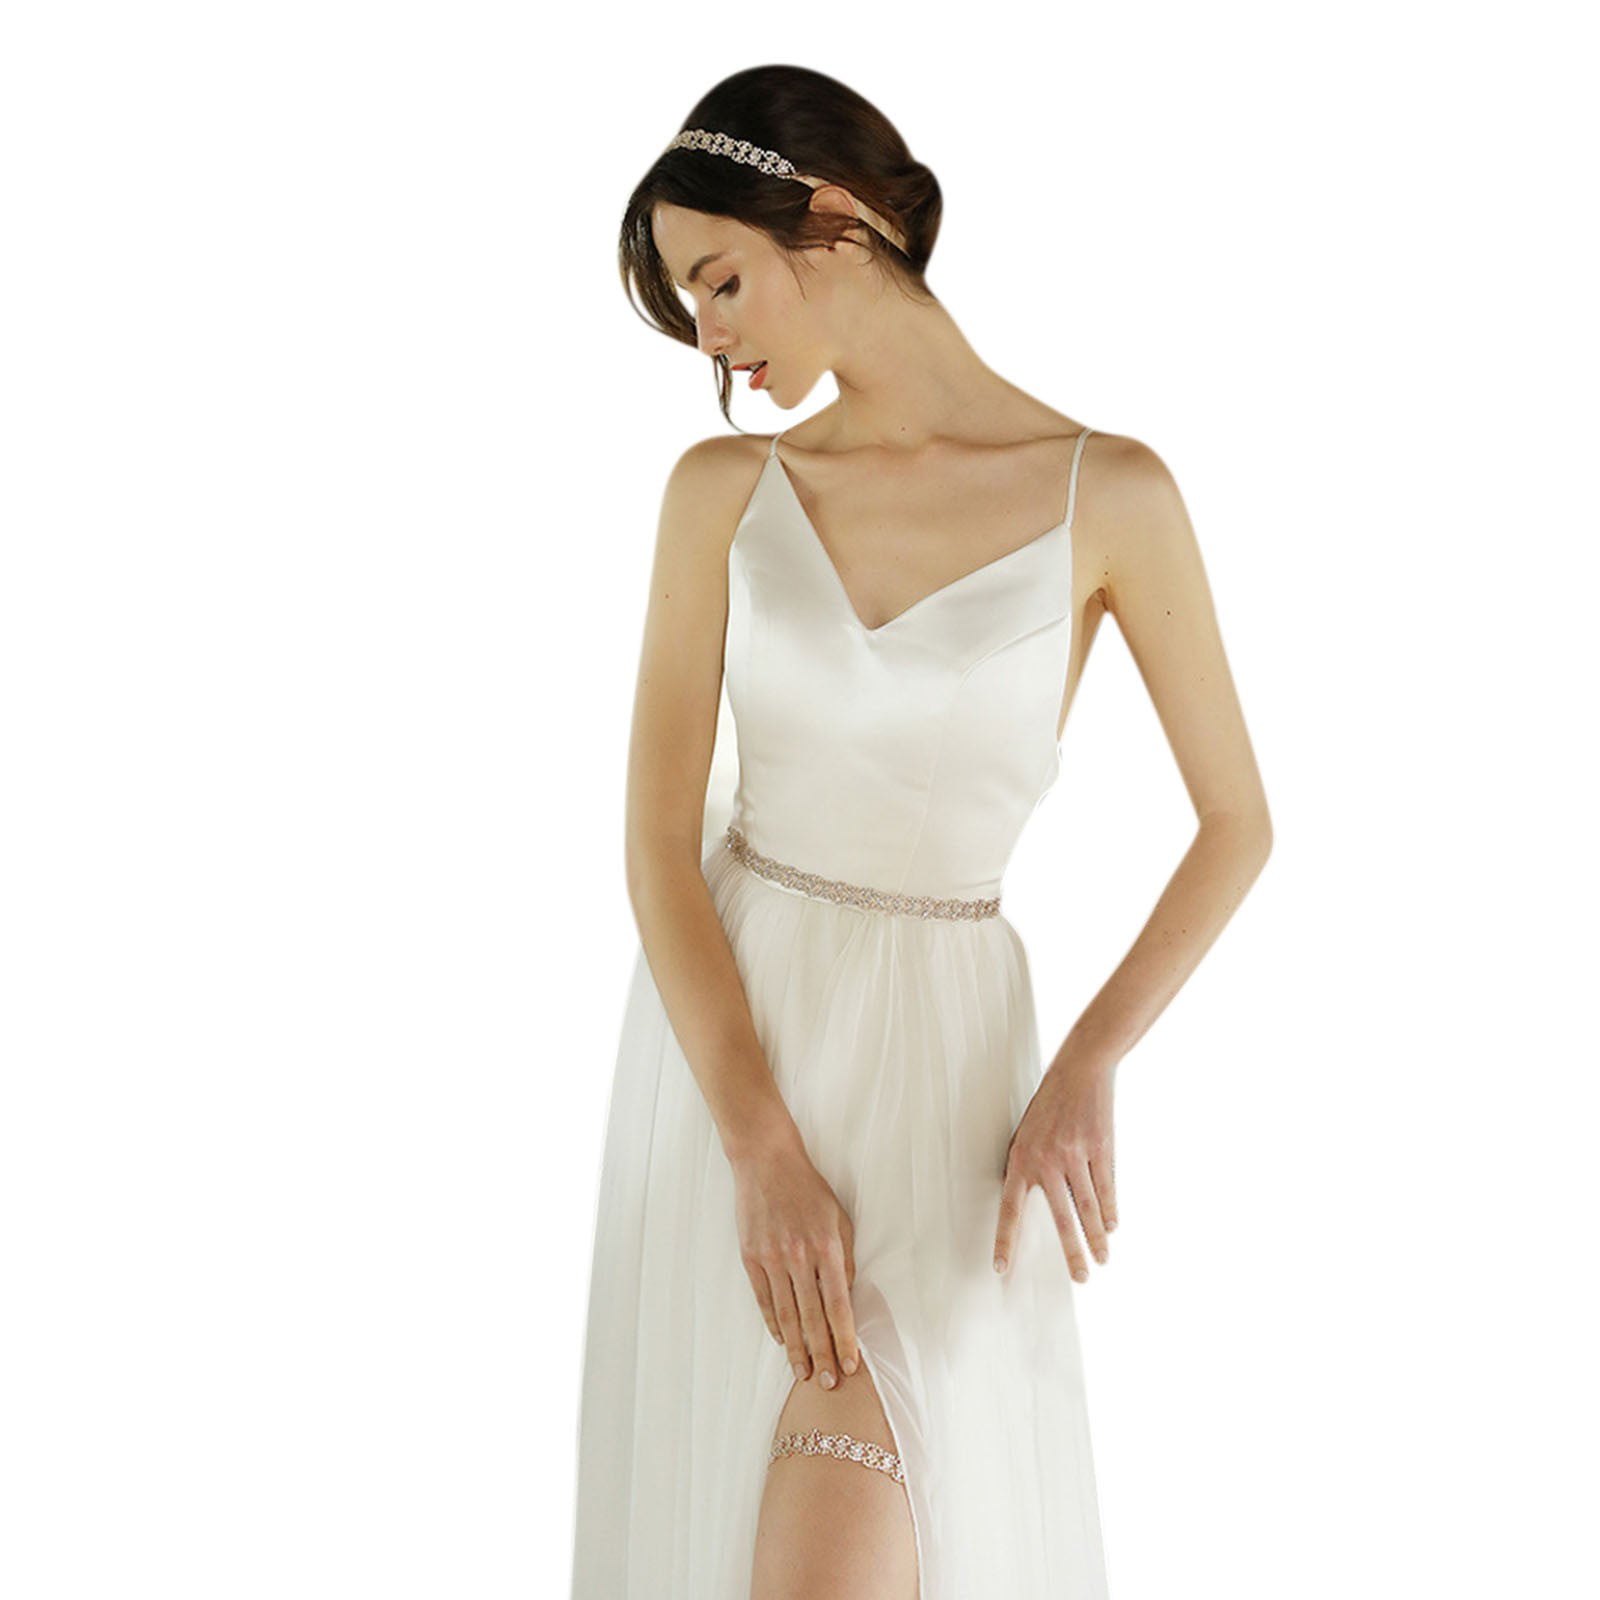  ifundom 2pcs Wedding Girdle Diamond Wedding Glitter Dress Belt  Crystal Women Belts for Dresses Gold Trim Wedding : Home & Kitchen